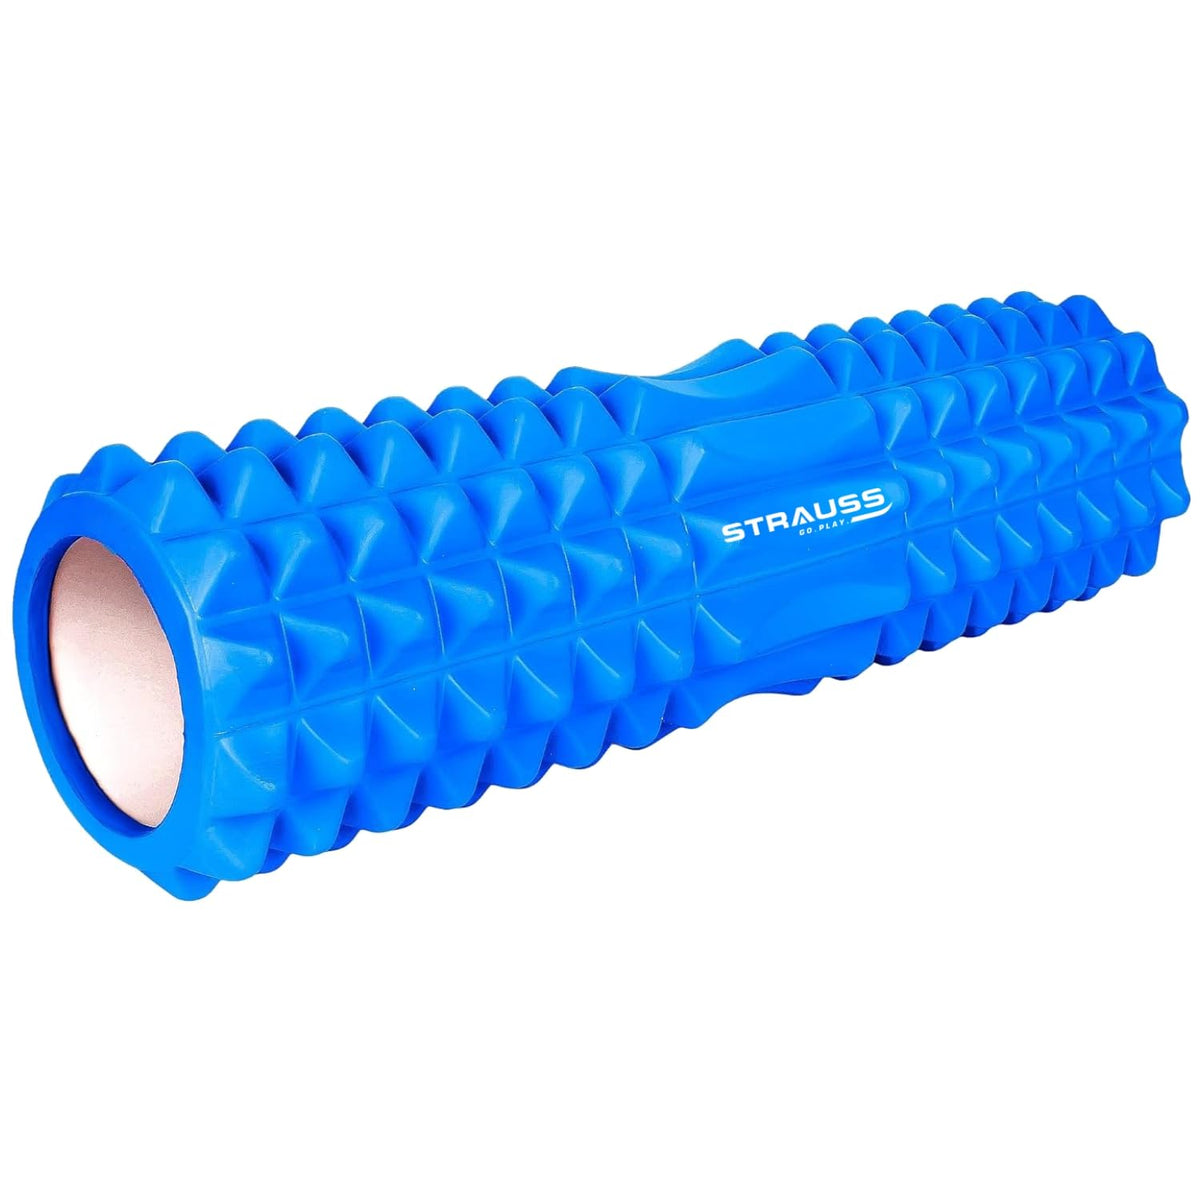 Strauss Grid Foam Roller | Eco-Friendly Spikes Foam Roller | Premium Eva Foam | Light Weight & Travel-Friendly Foam Roller for Relieve Muscle Tightness, Soreness & Inflammation,45 CM (Blue)